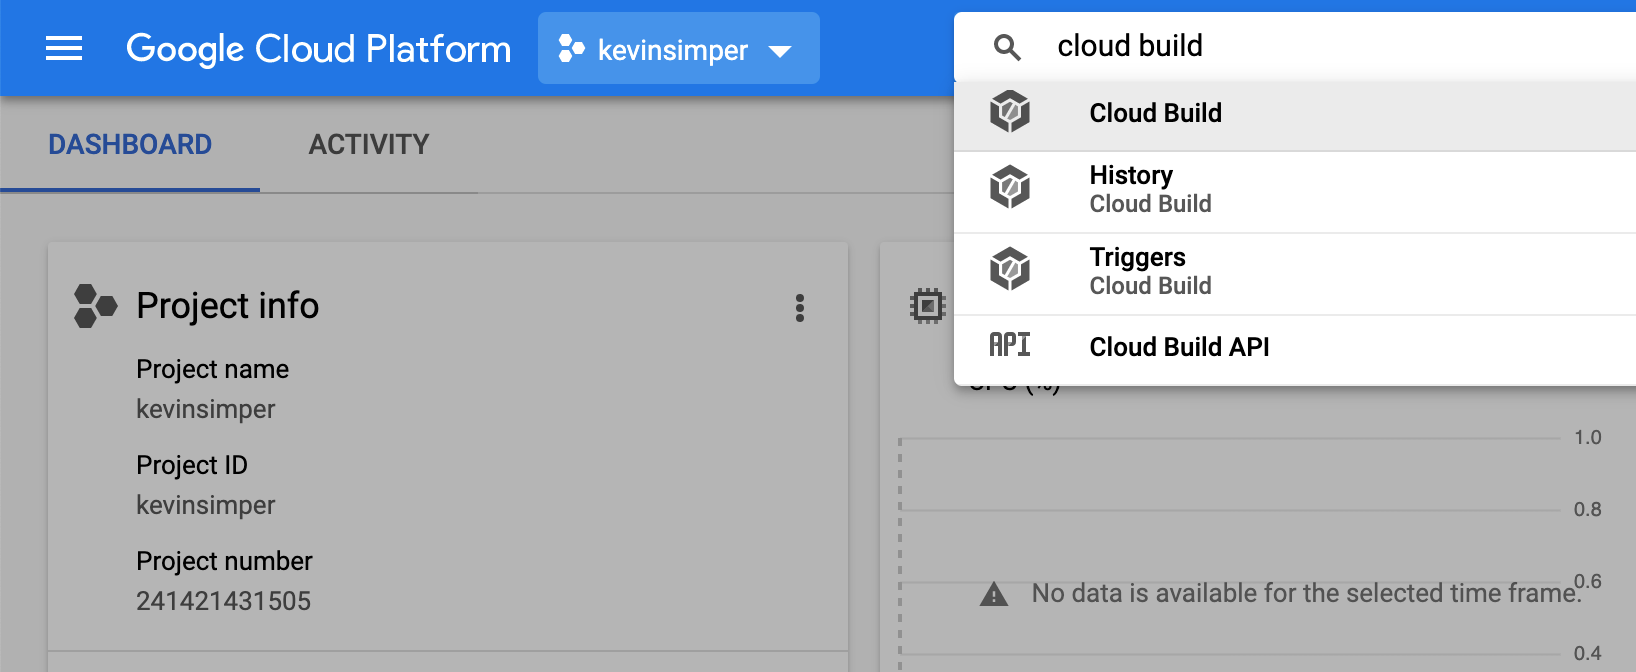 Google Cloud Search Bar Cloud Build